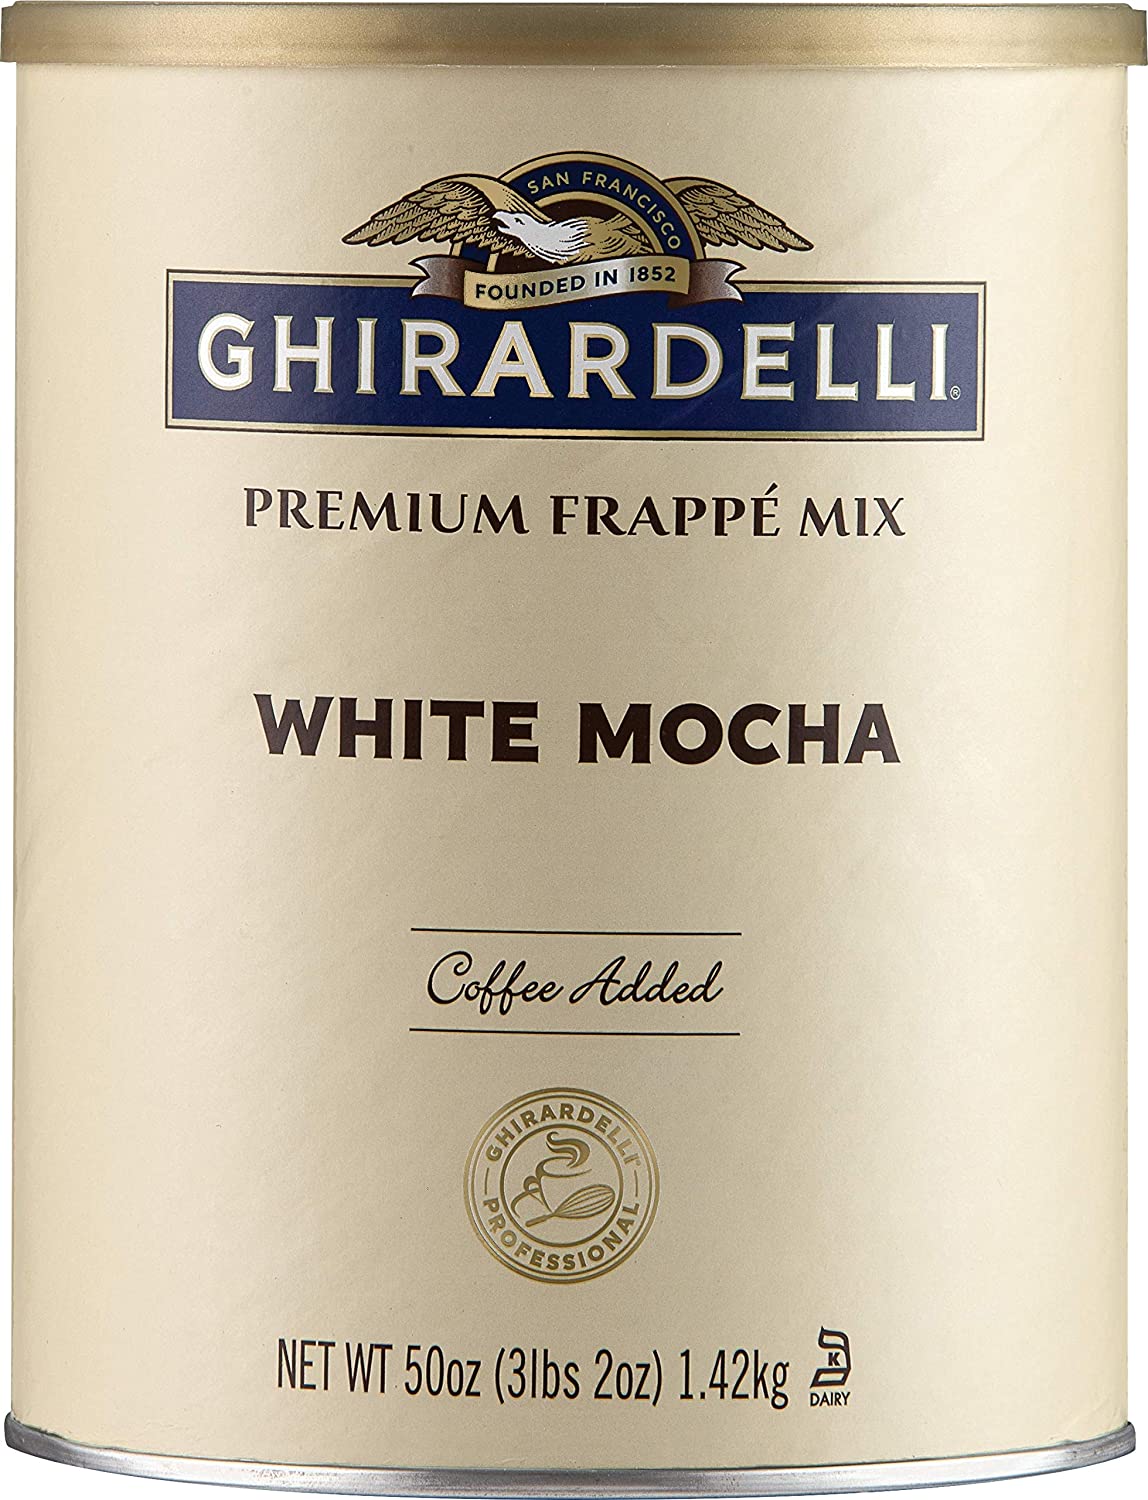 Ghirardelli Frappe (W/ COFFEE) - 3.12lb Cans: White Mocha